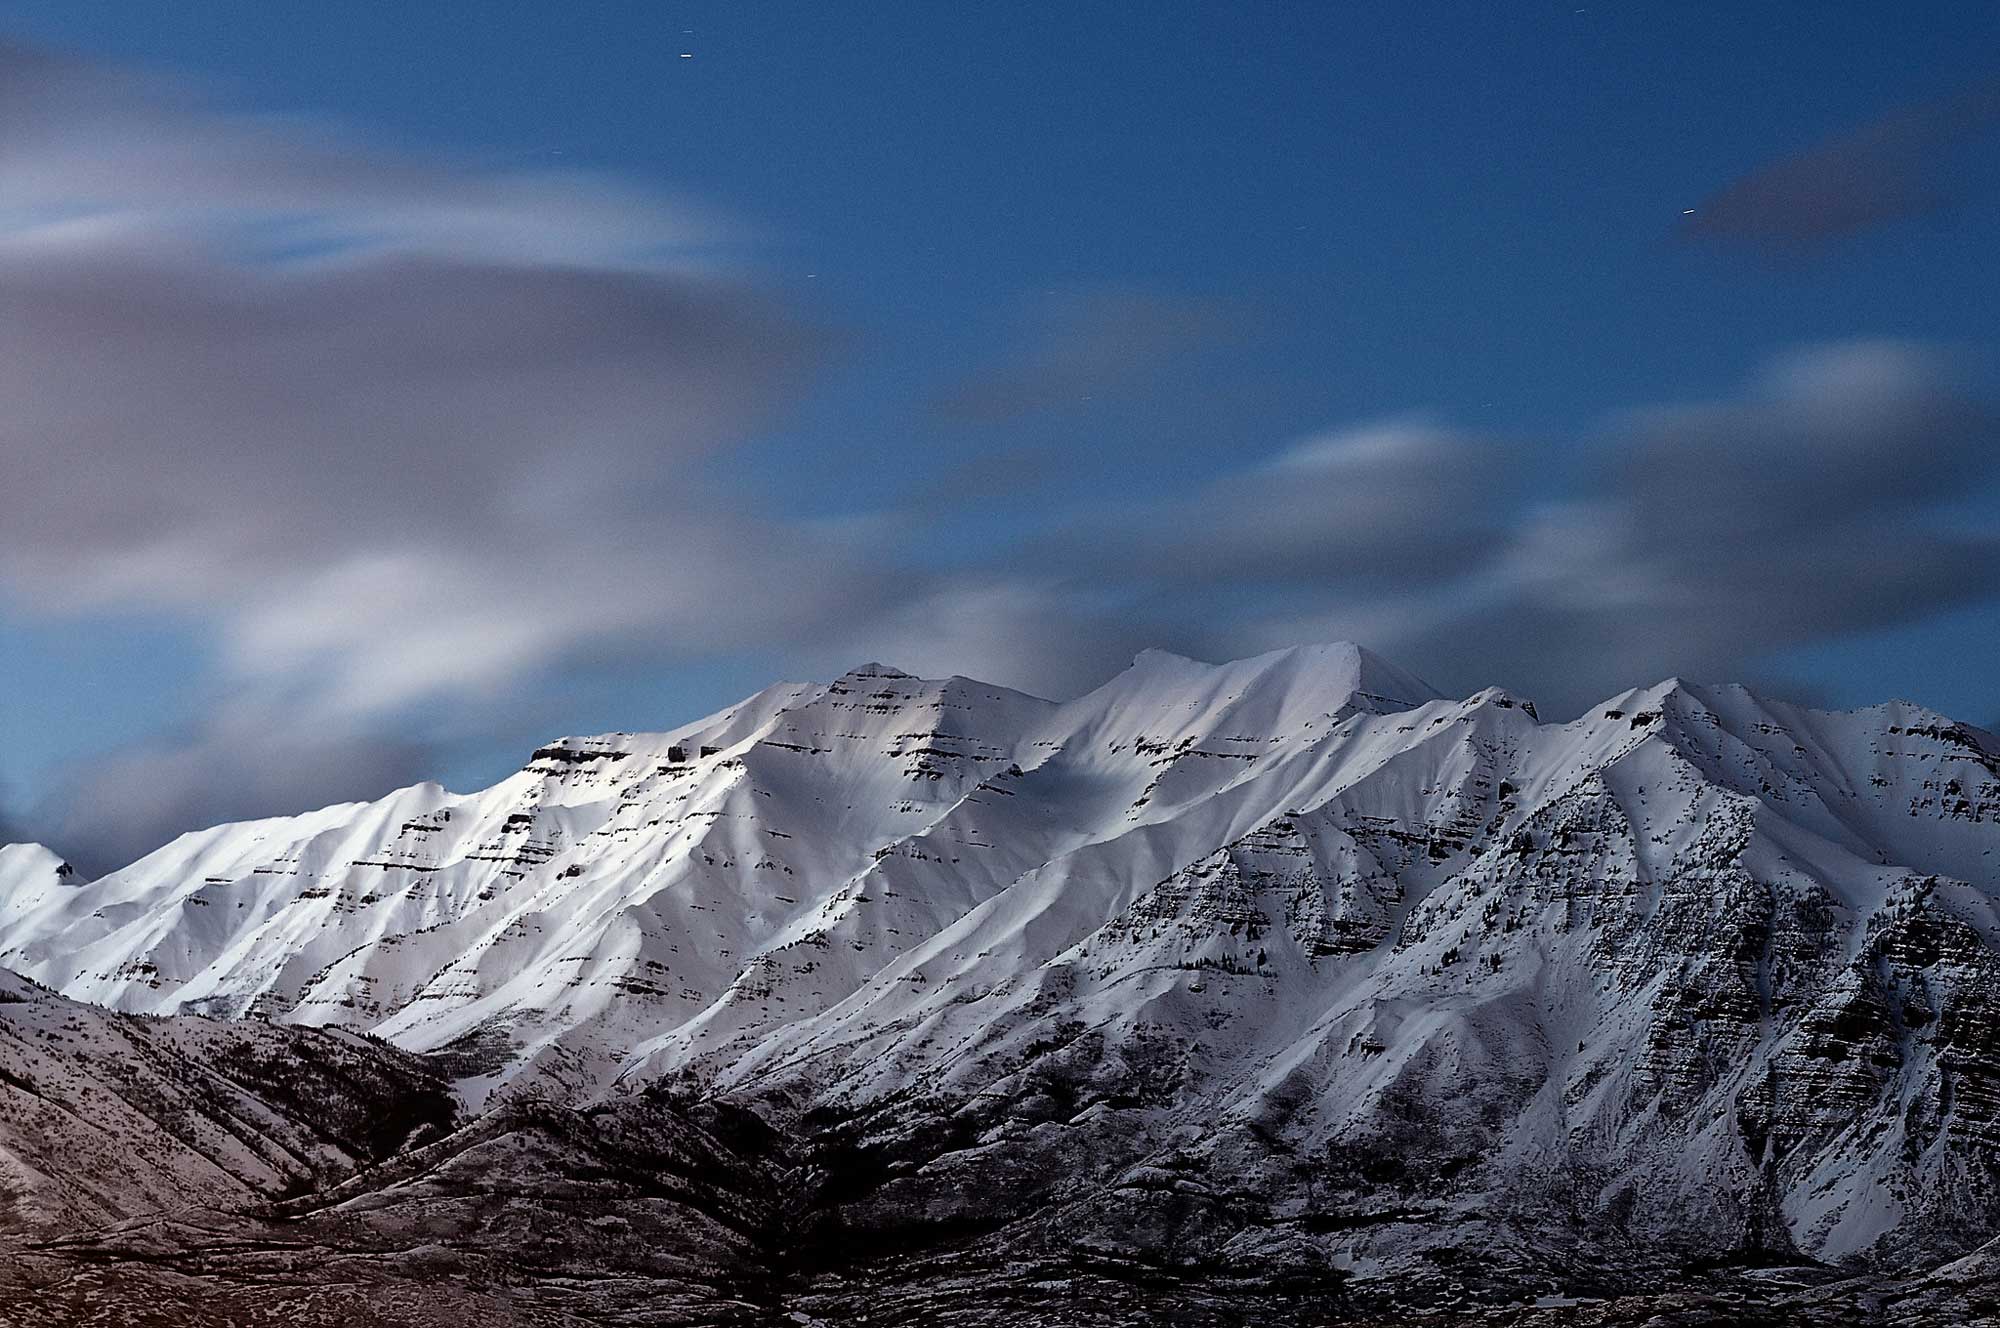 Photograph of Mount Timpanogos in Utah.